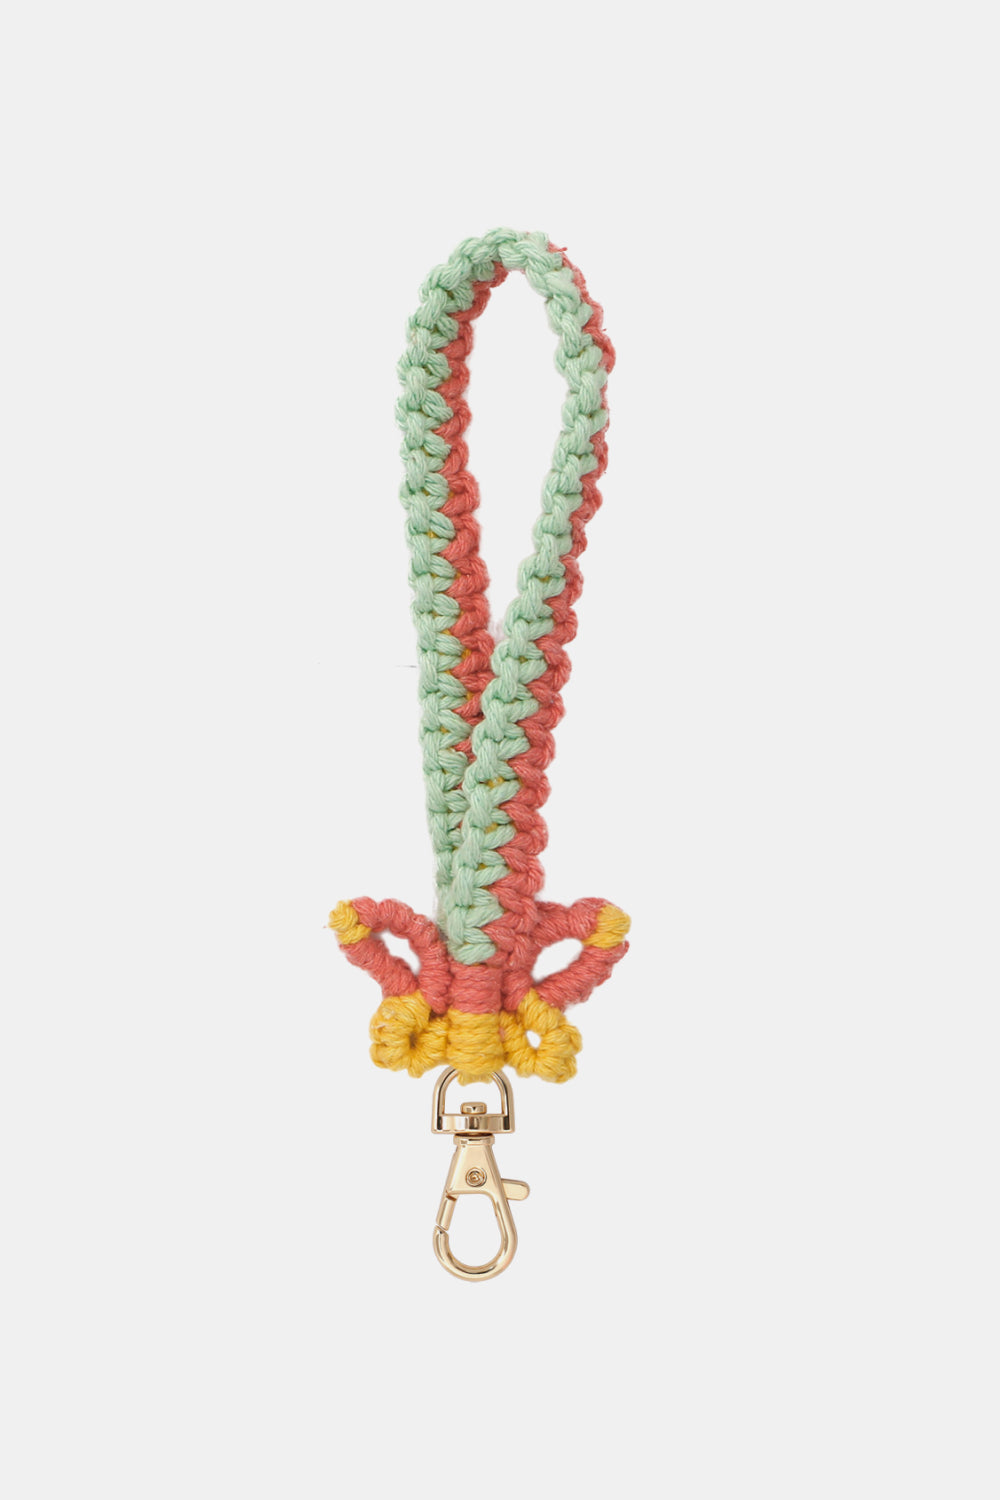 Trendsi Cupid Beauty Supplies Orange / One Size Keychains Butterfly Shape Macrame Key Chain